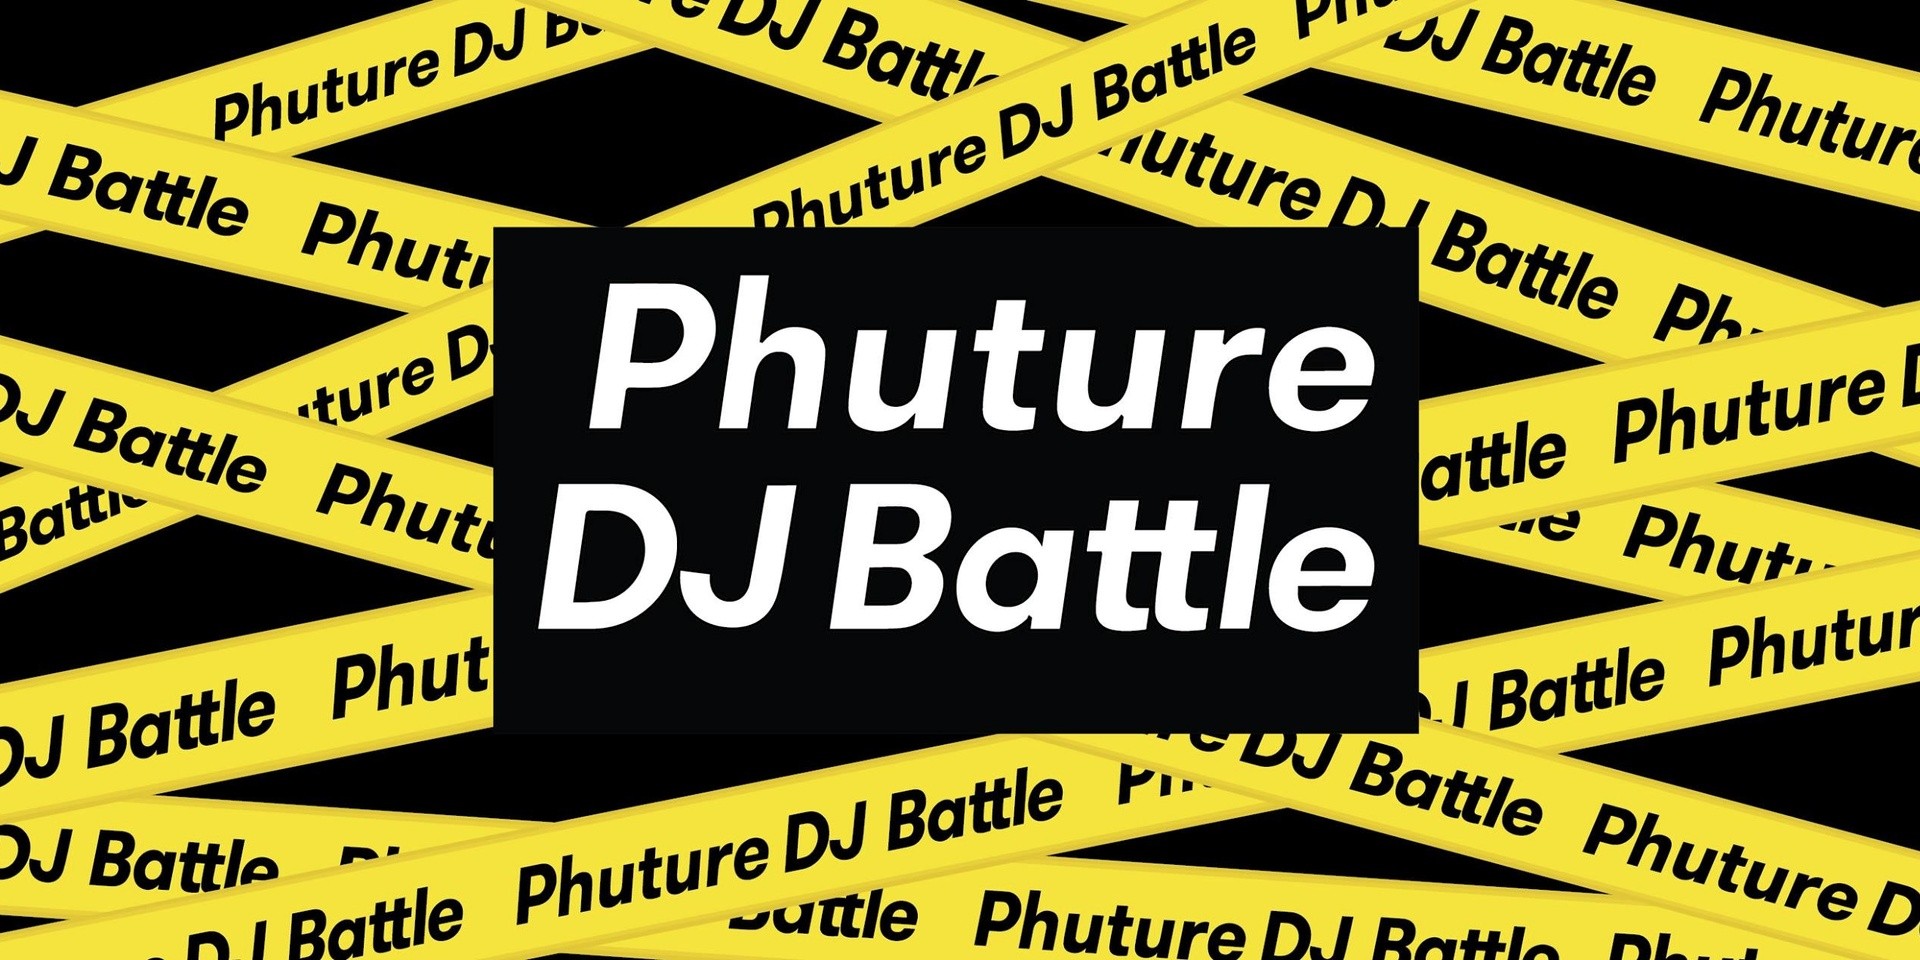 Finalists announced for Phuture DJ Battle 2017 